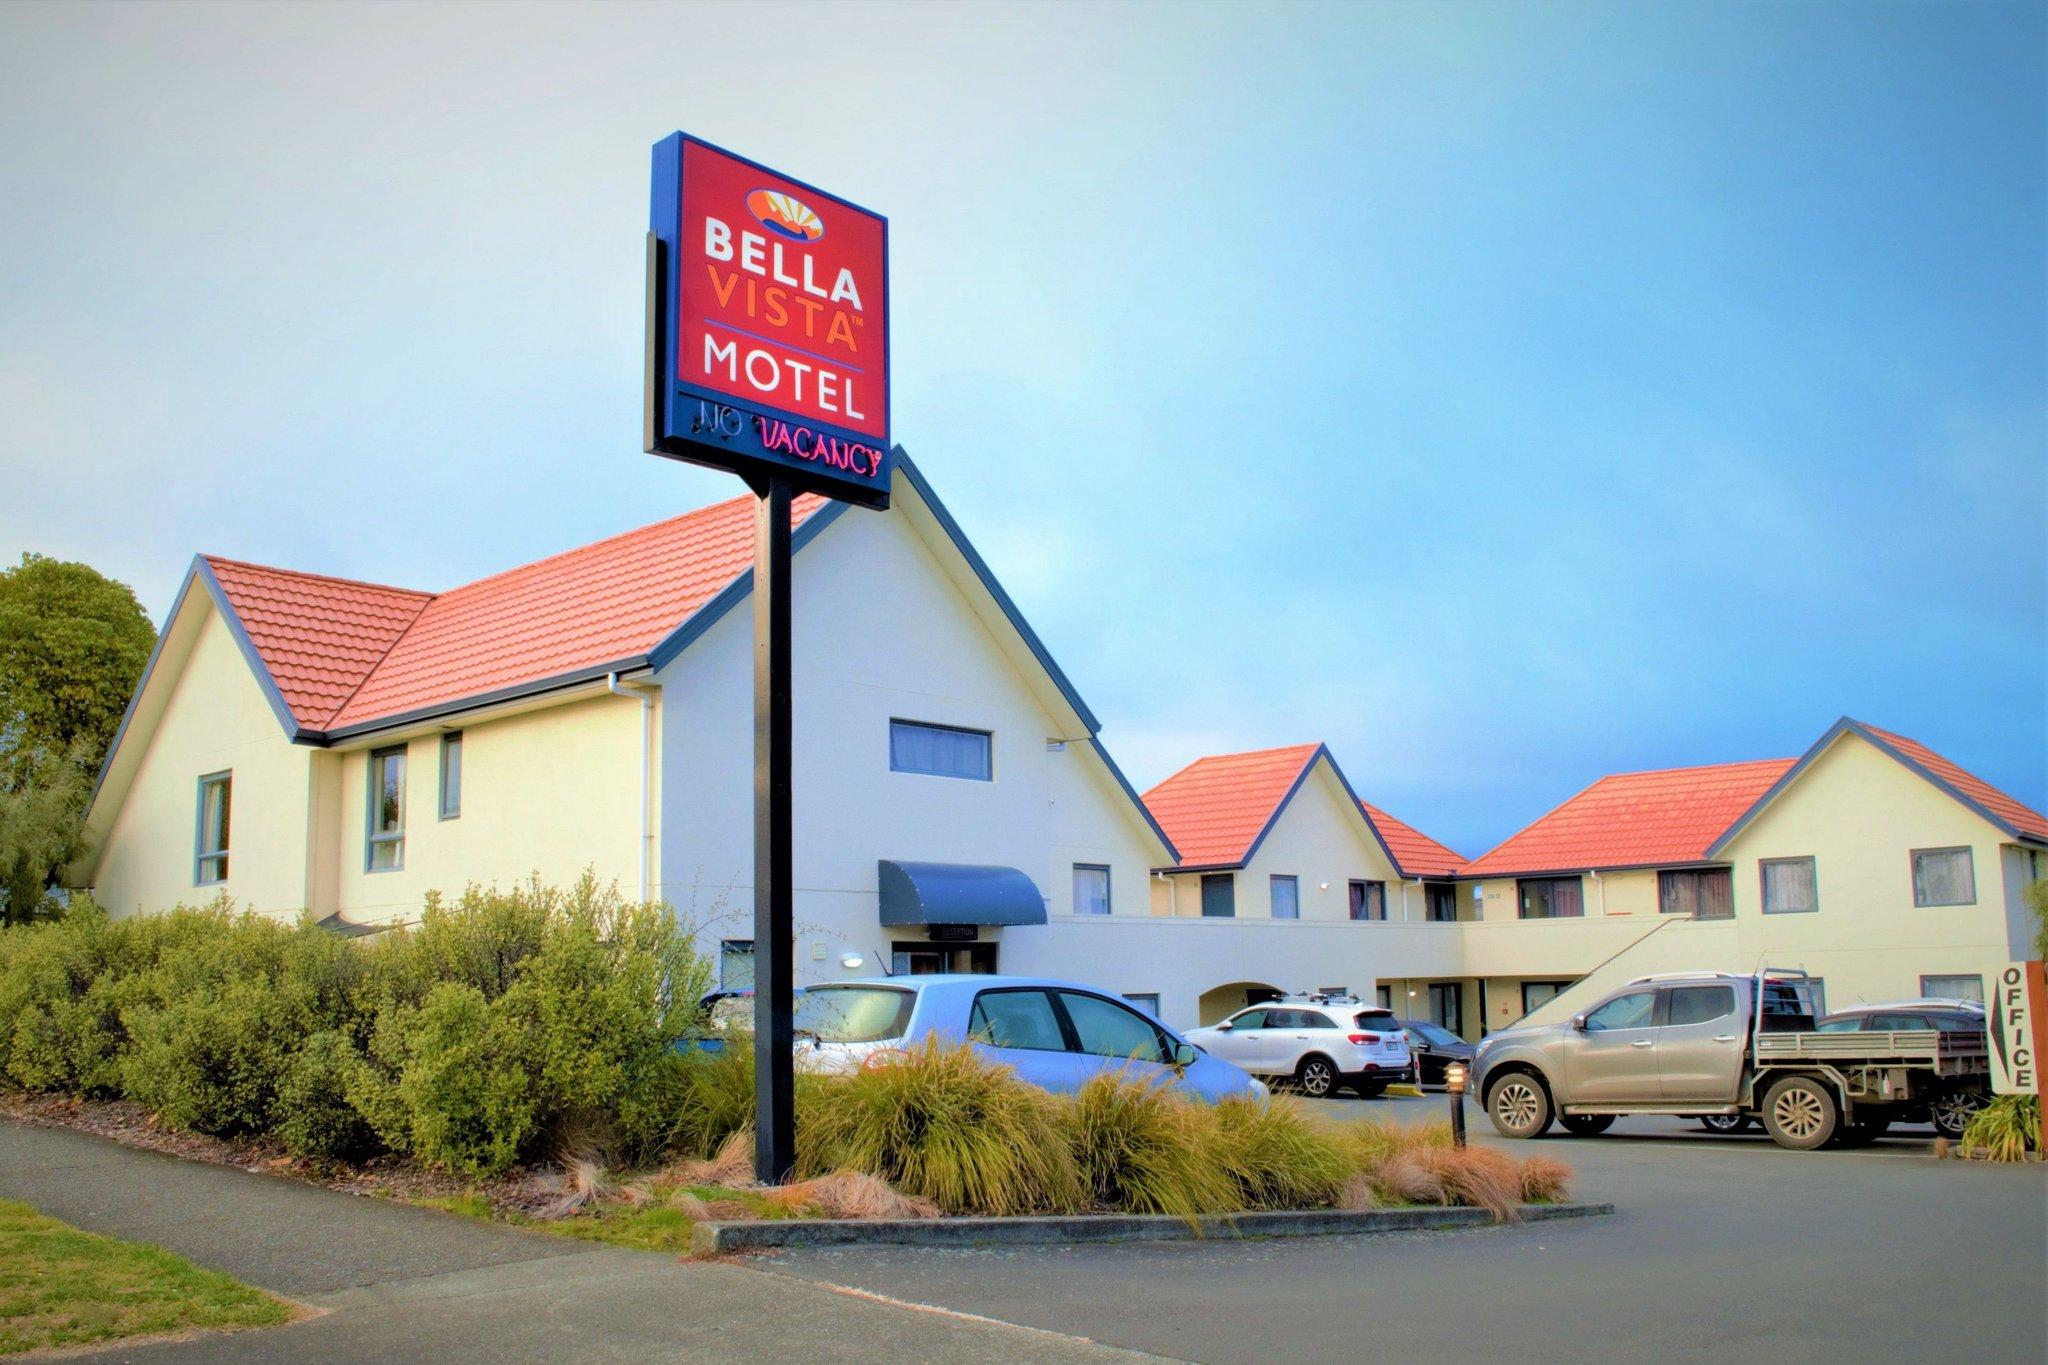 Bella Vista Motel Taupo in Taupo, NZ